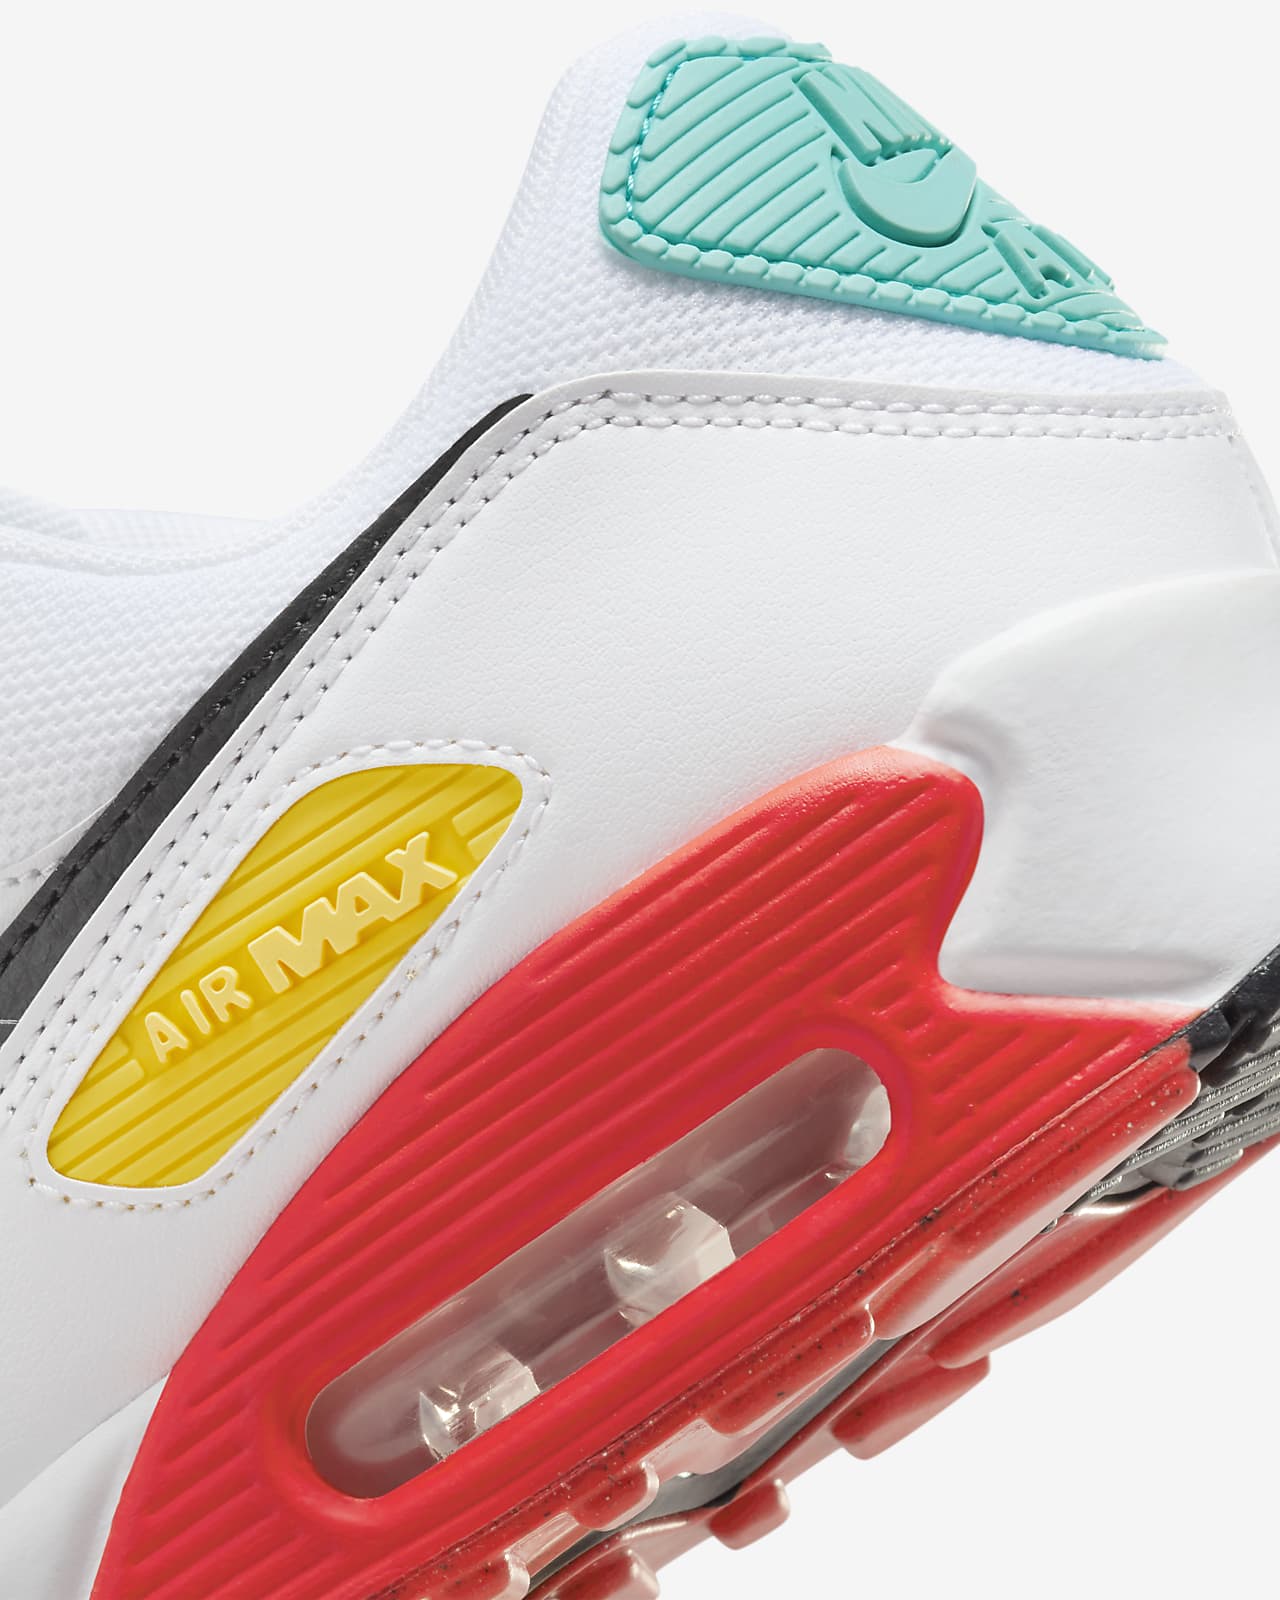 Las Nike Air Max 90 Icons son acero valyrio para tus outfit de  primavera/verano